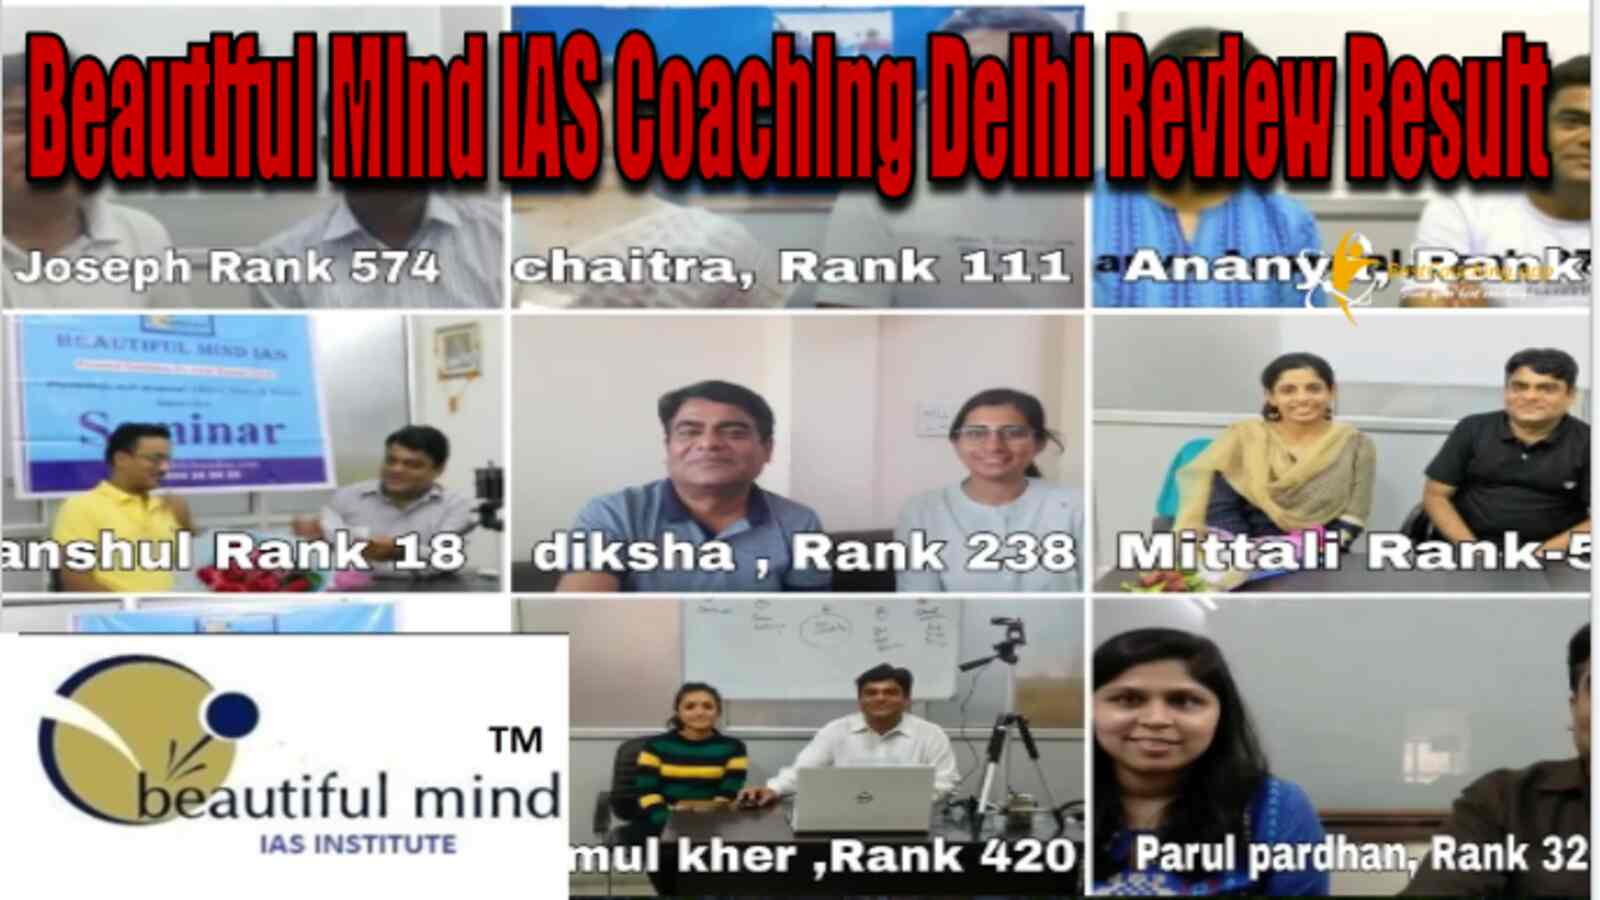 Beautiful Mind IAS Coaching Delhi Reviews Result